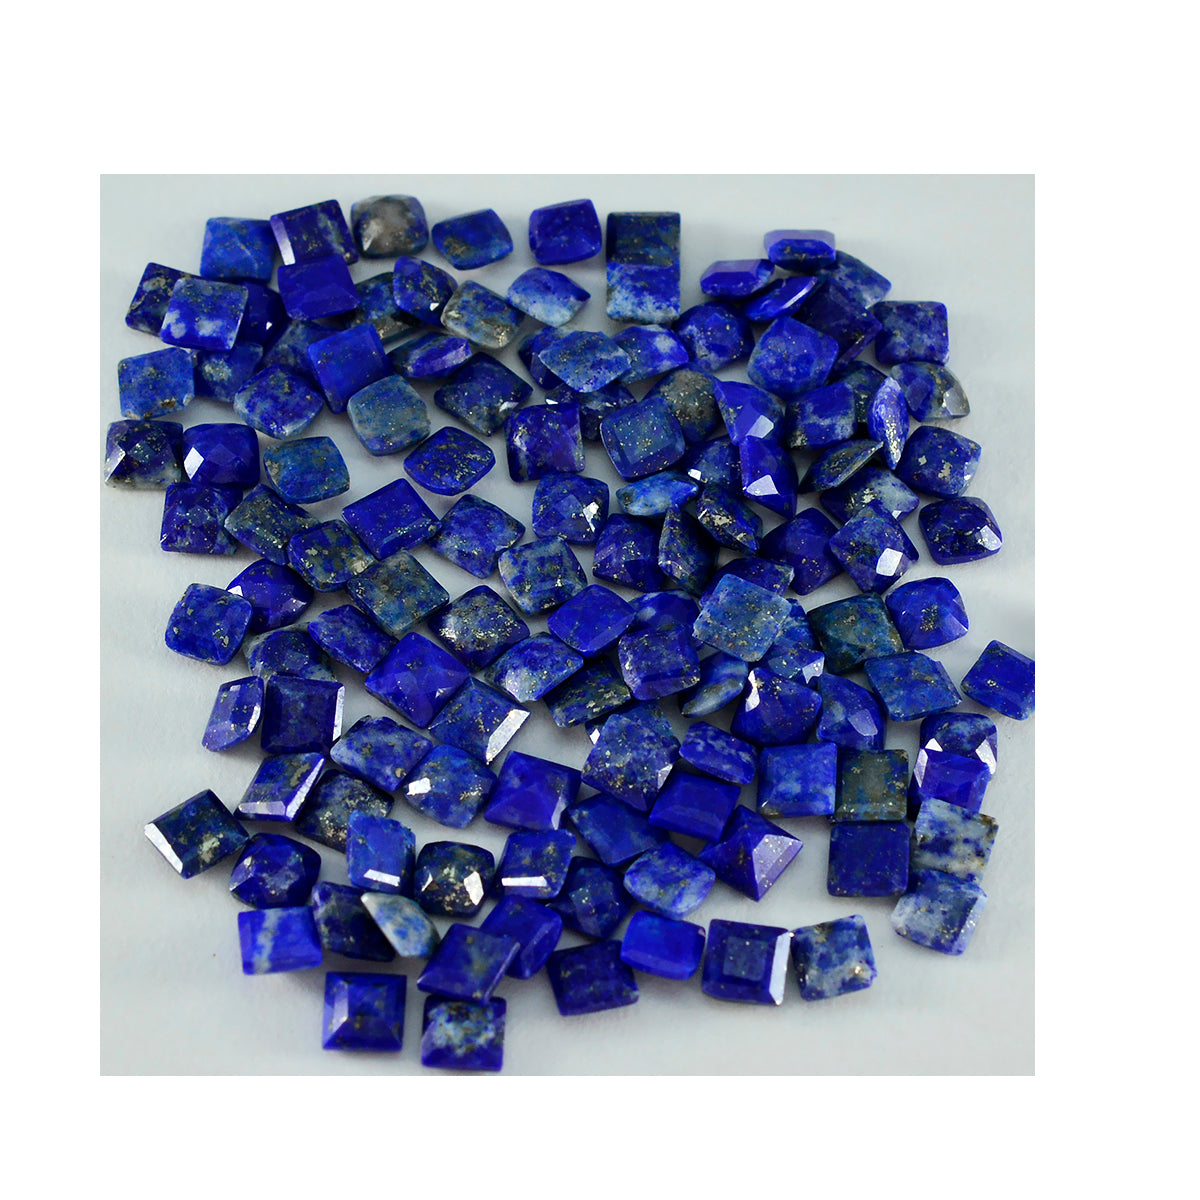 Riyogems 1PC Echte Blauwe Lapis Lazuli Facet 4x4 mm Vierkante Vorm knappe Kwaliteit Losse Steen